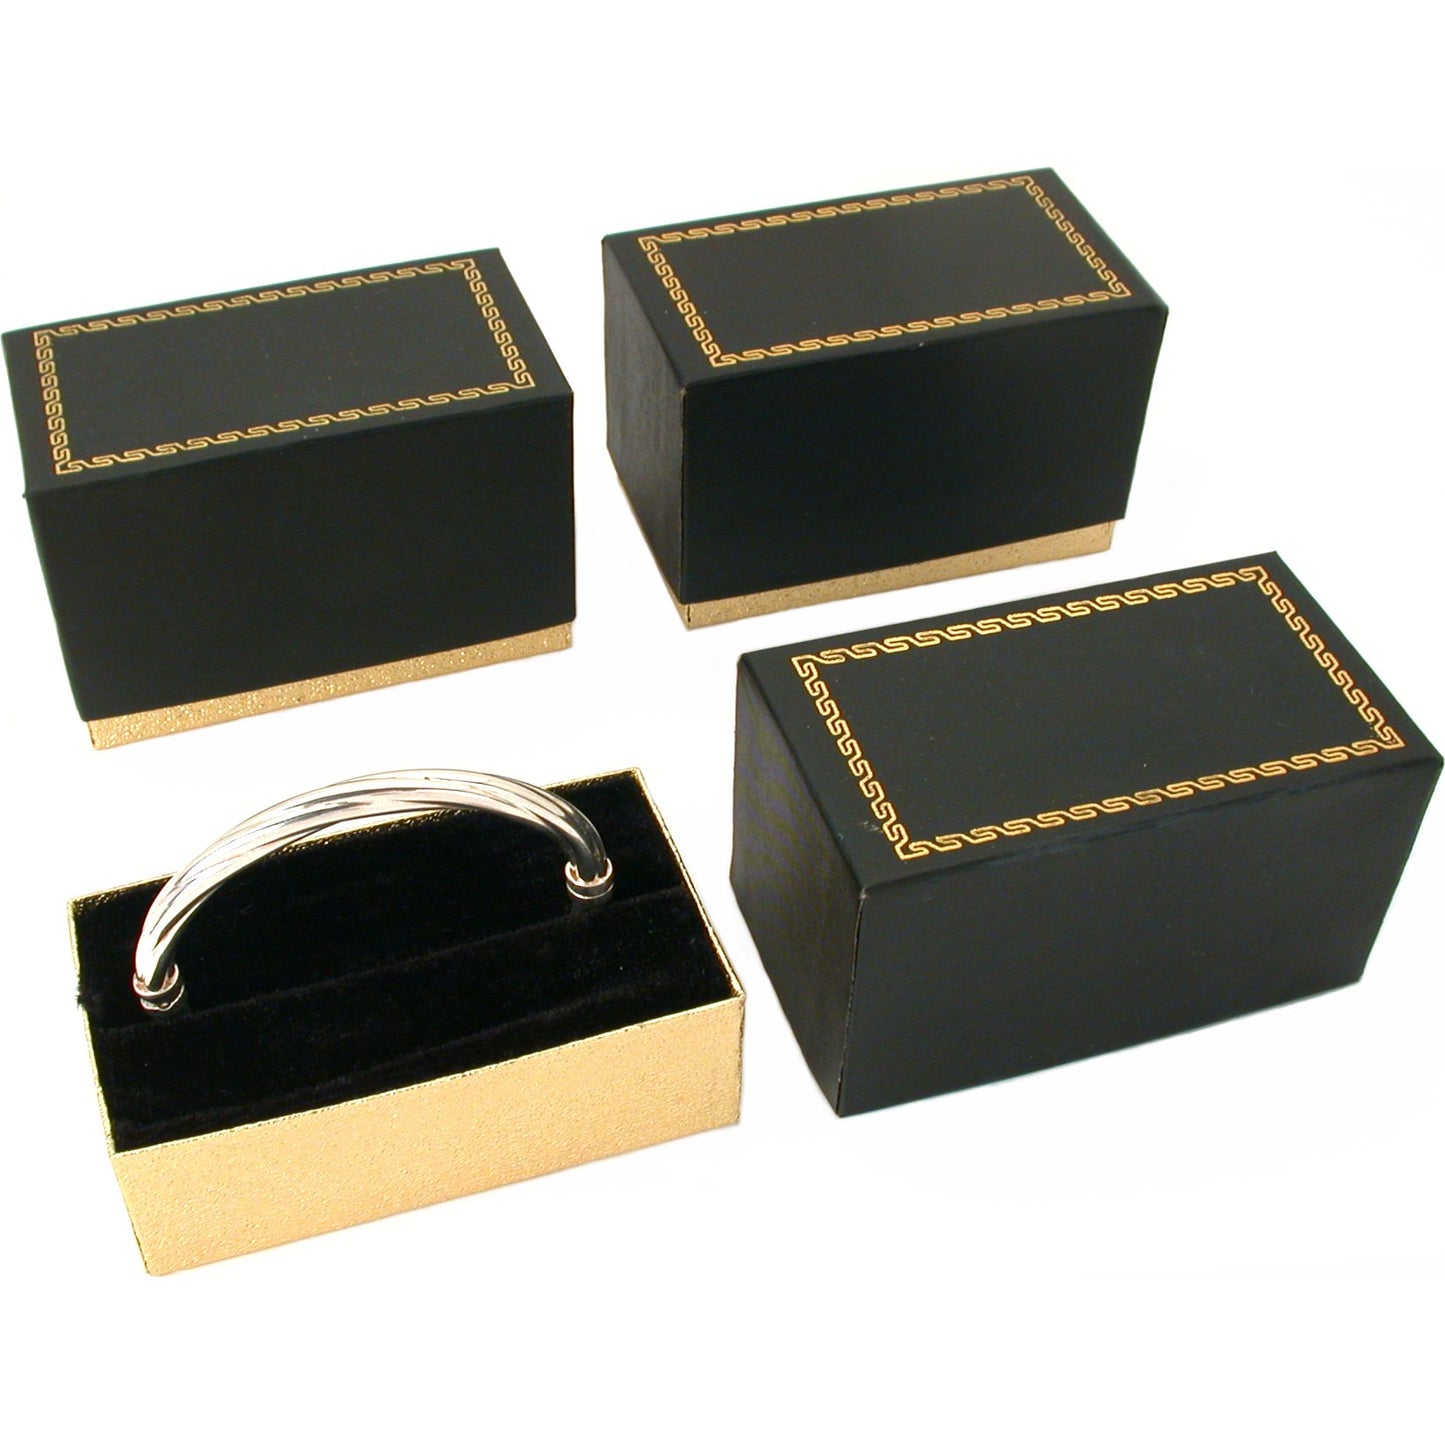 Bangle Bracelet Gift Box Black & Gold 2 1/2" (Only 1 Box)